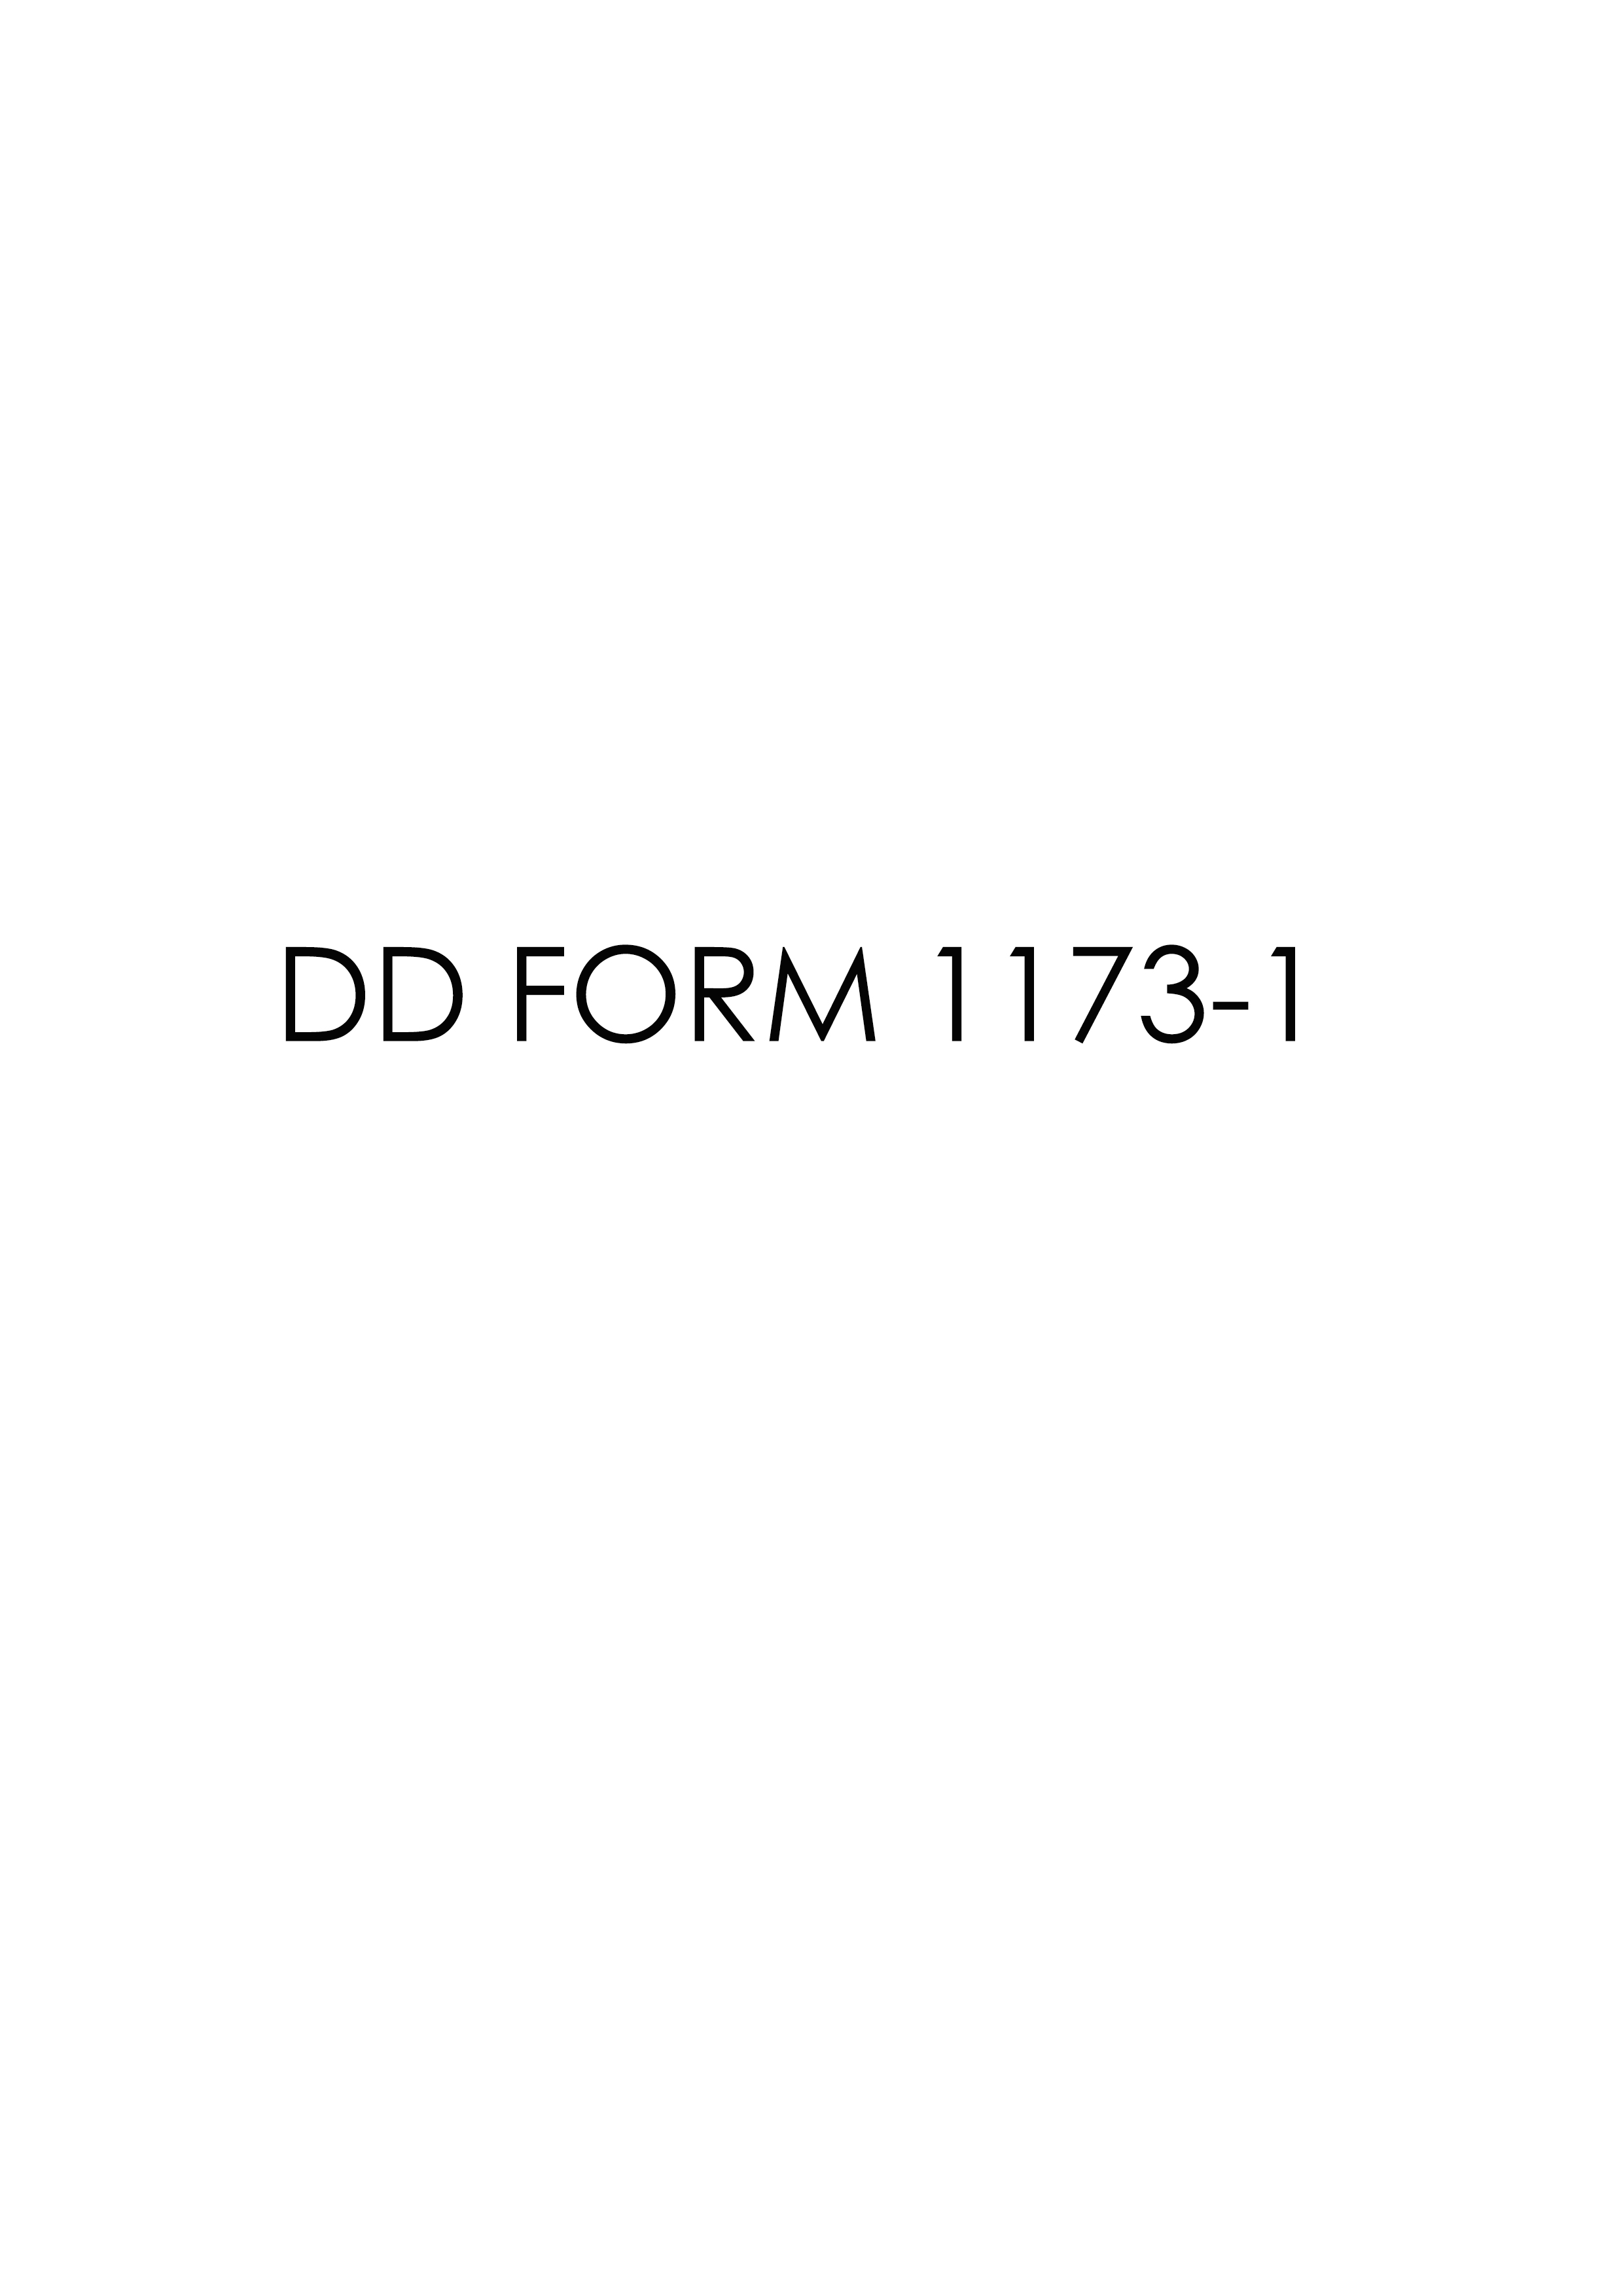 Download dd 1173-1 Form